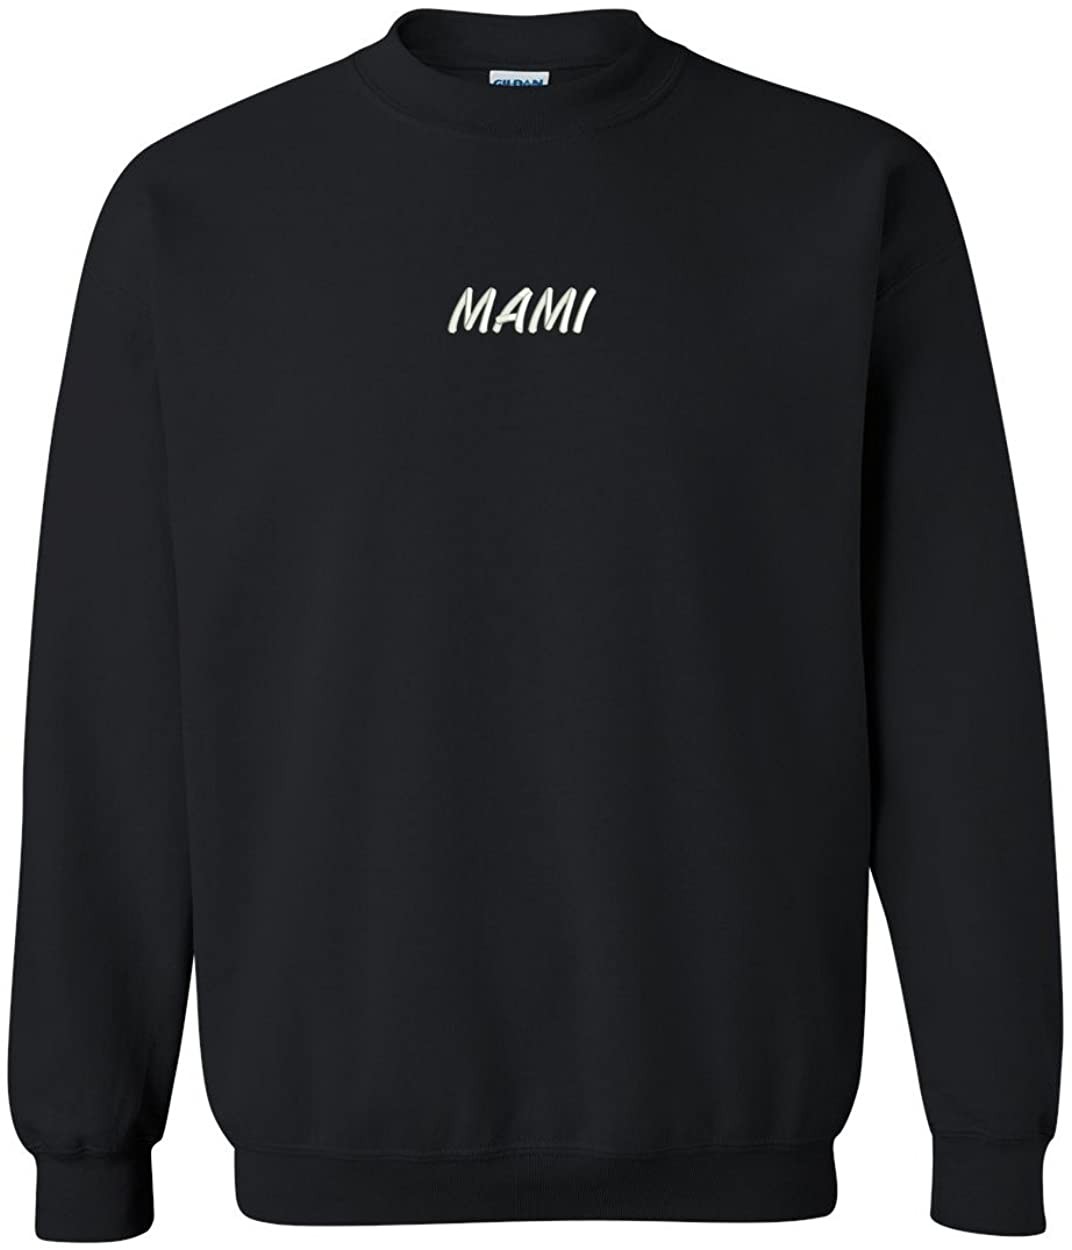 Trendy Apparel Shop Mami Embroidered Crewneck Sweatshirt